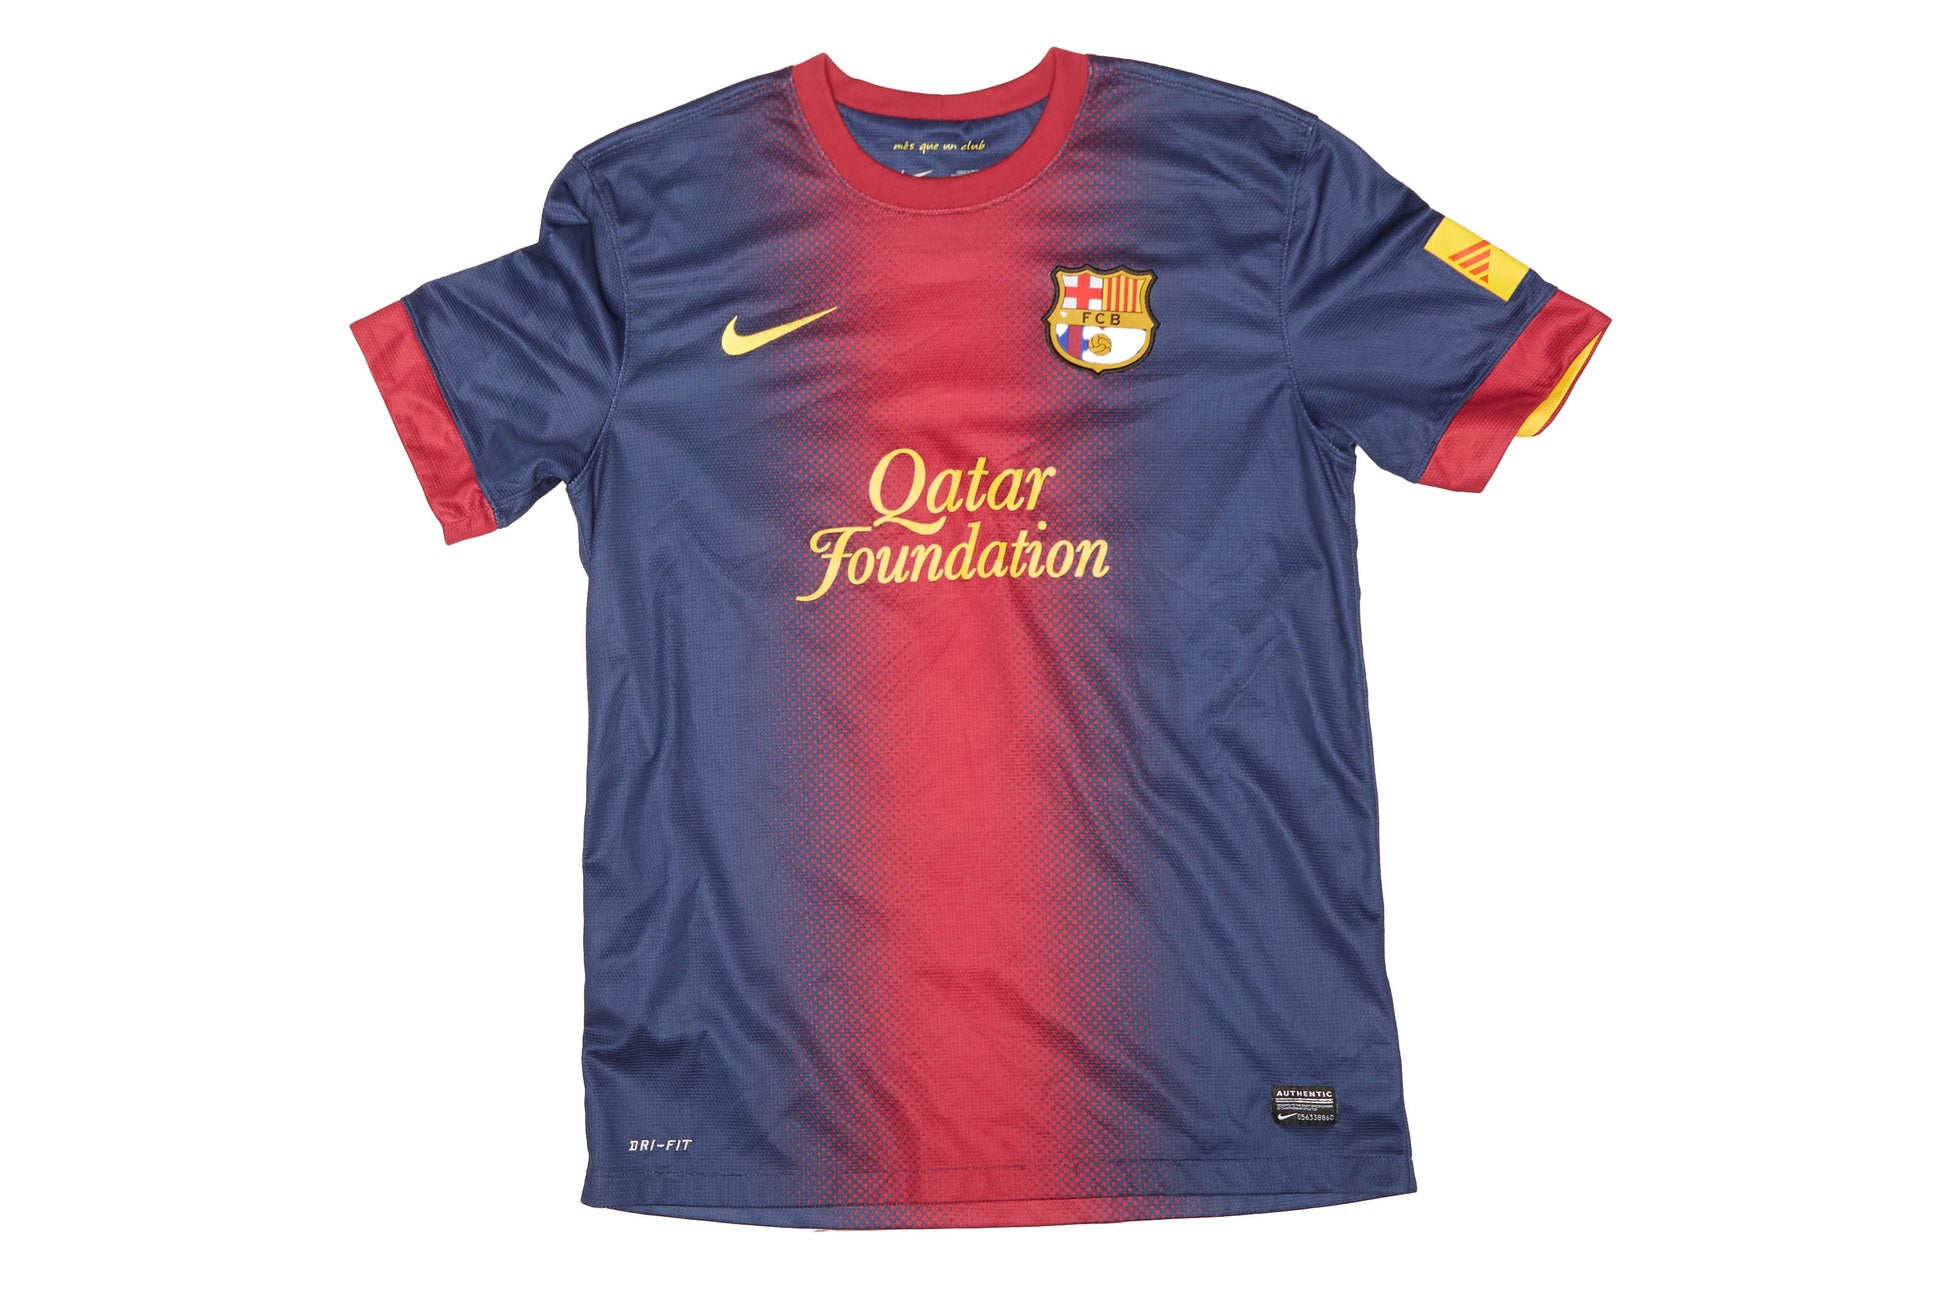 Mens Nike FC Barcelona Shirt - M